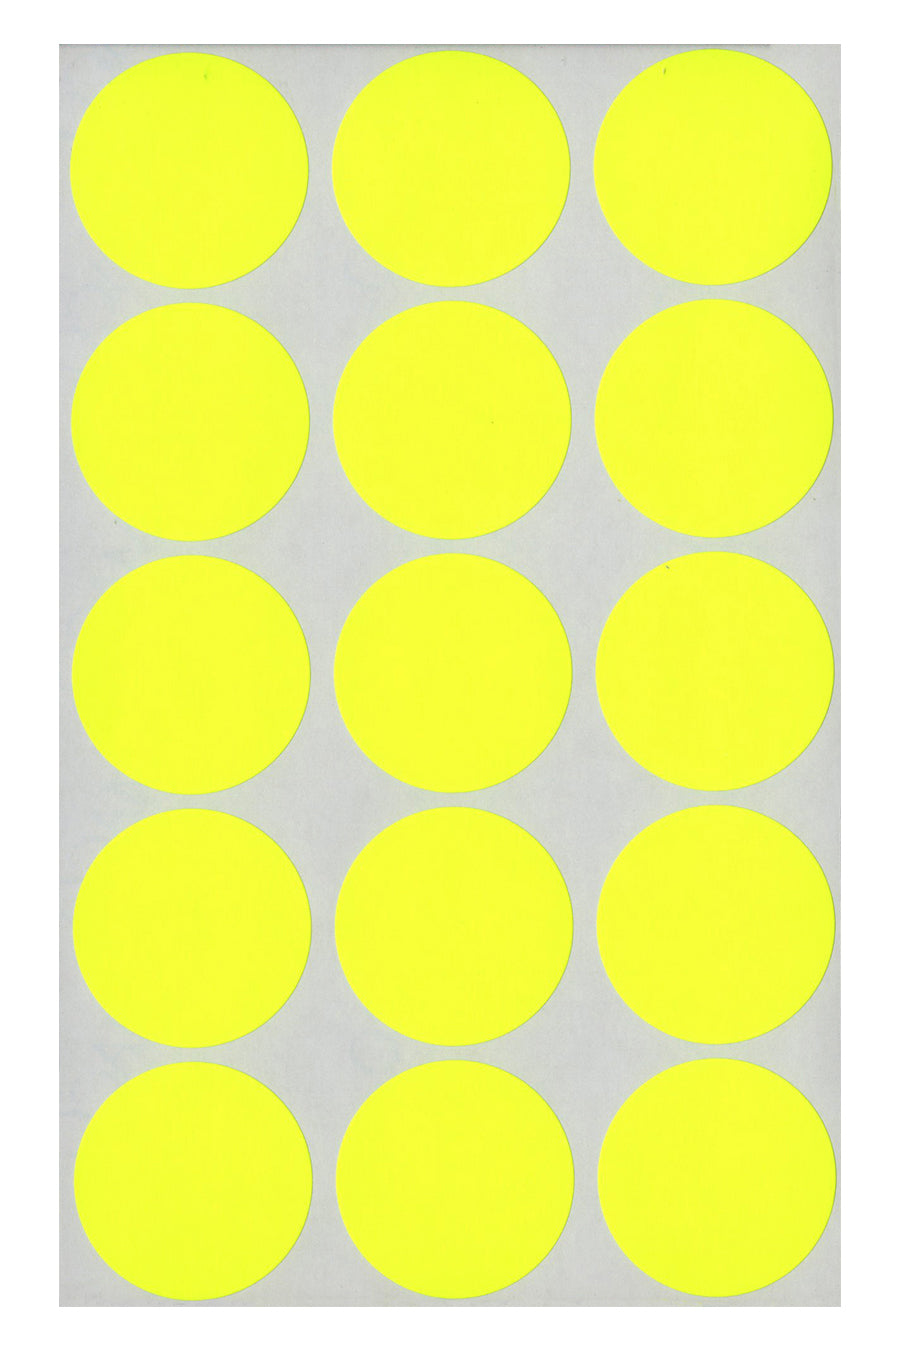 1-1/4" Dia. Color Coding Labels, Yellow Neon, 400/Bx